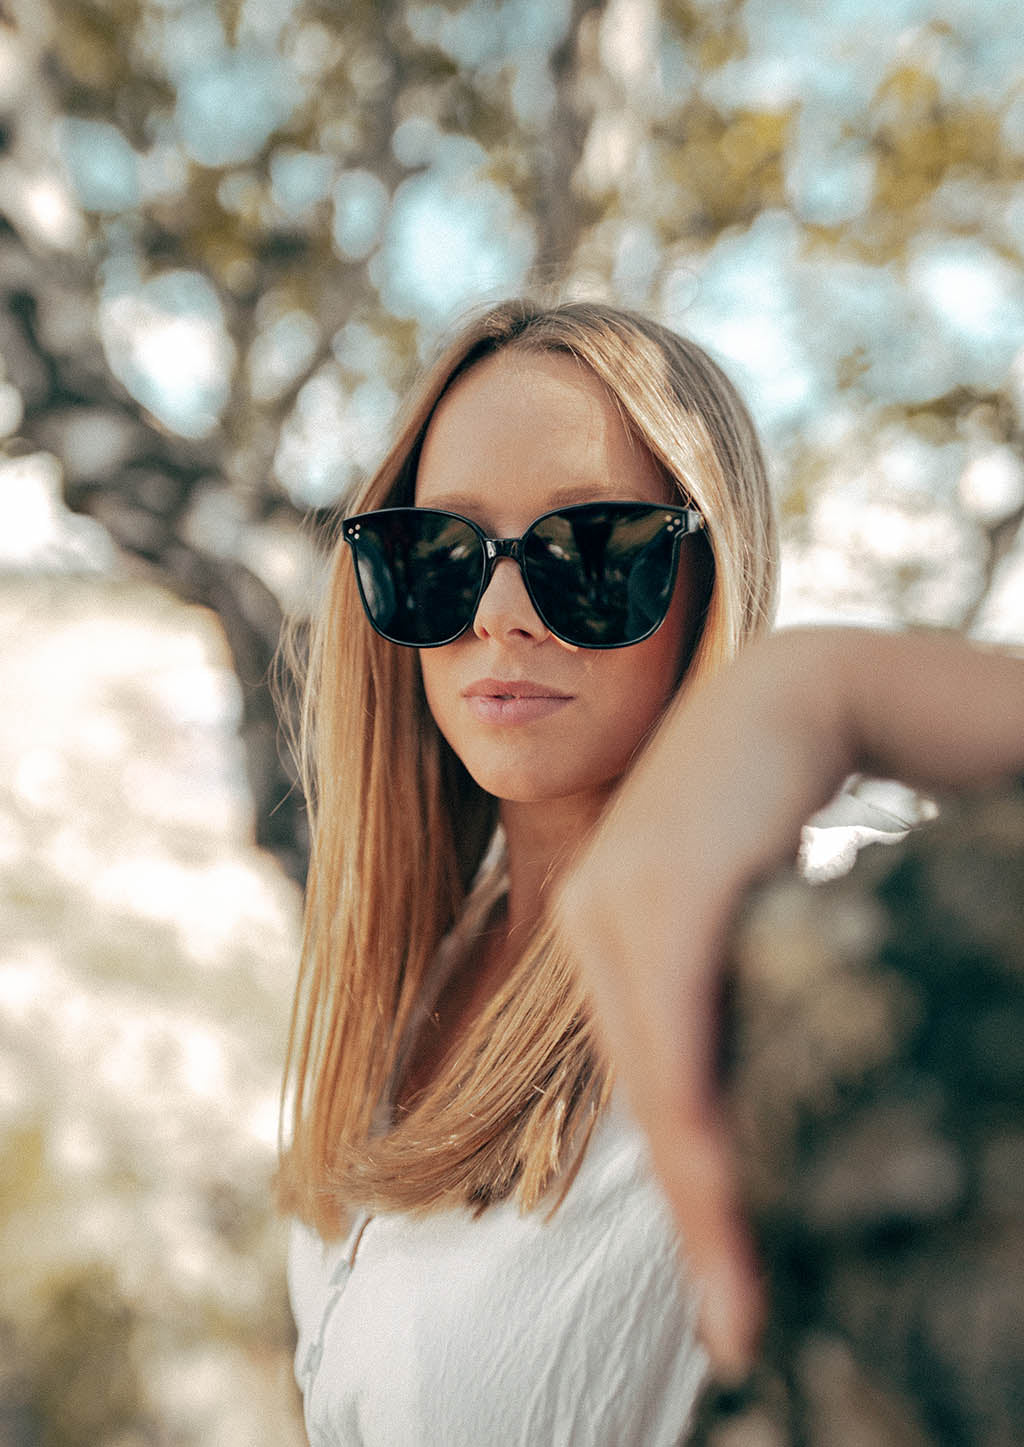 Dahlia Wayfarer sunglasses - On female Swedish model